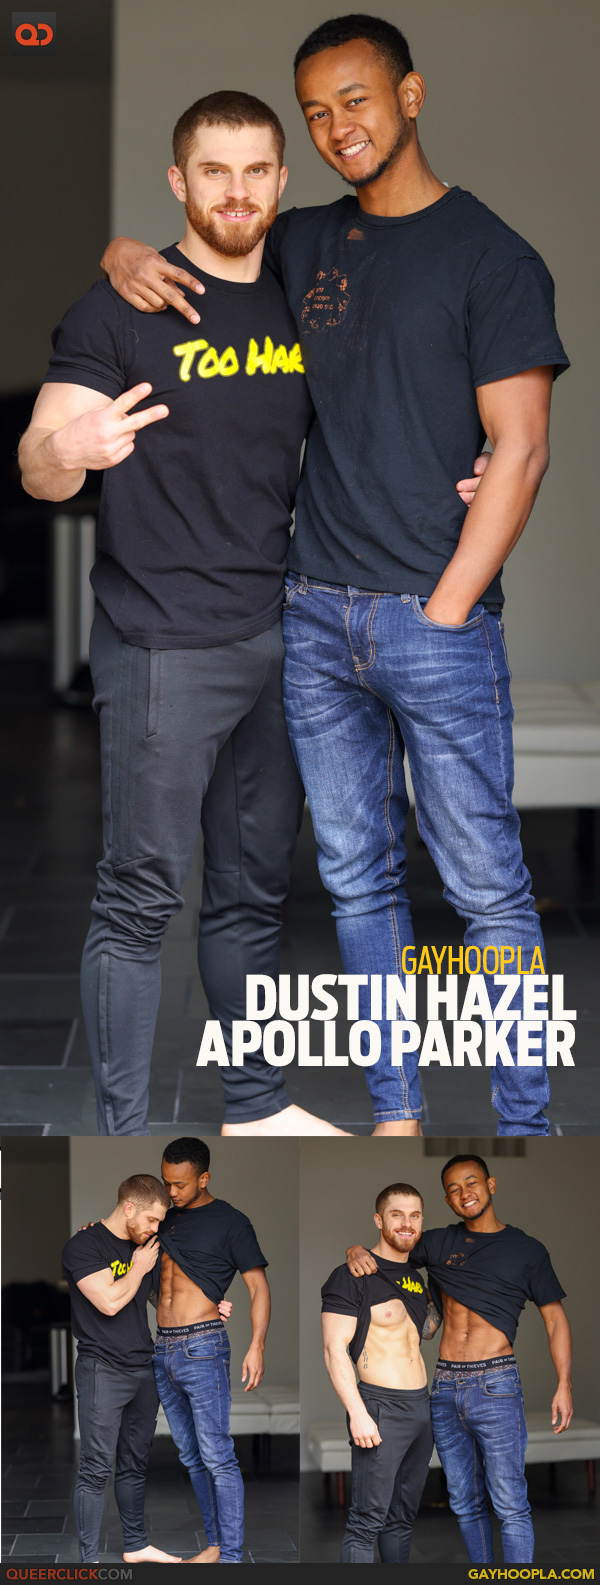 Gayhoopla: Dustin Hazel and Apollo Parker